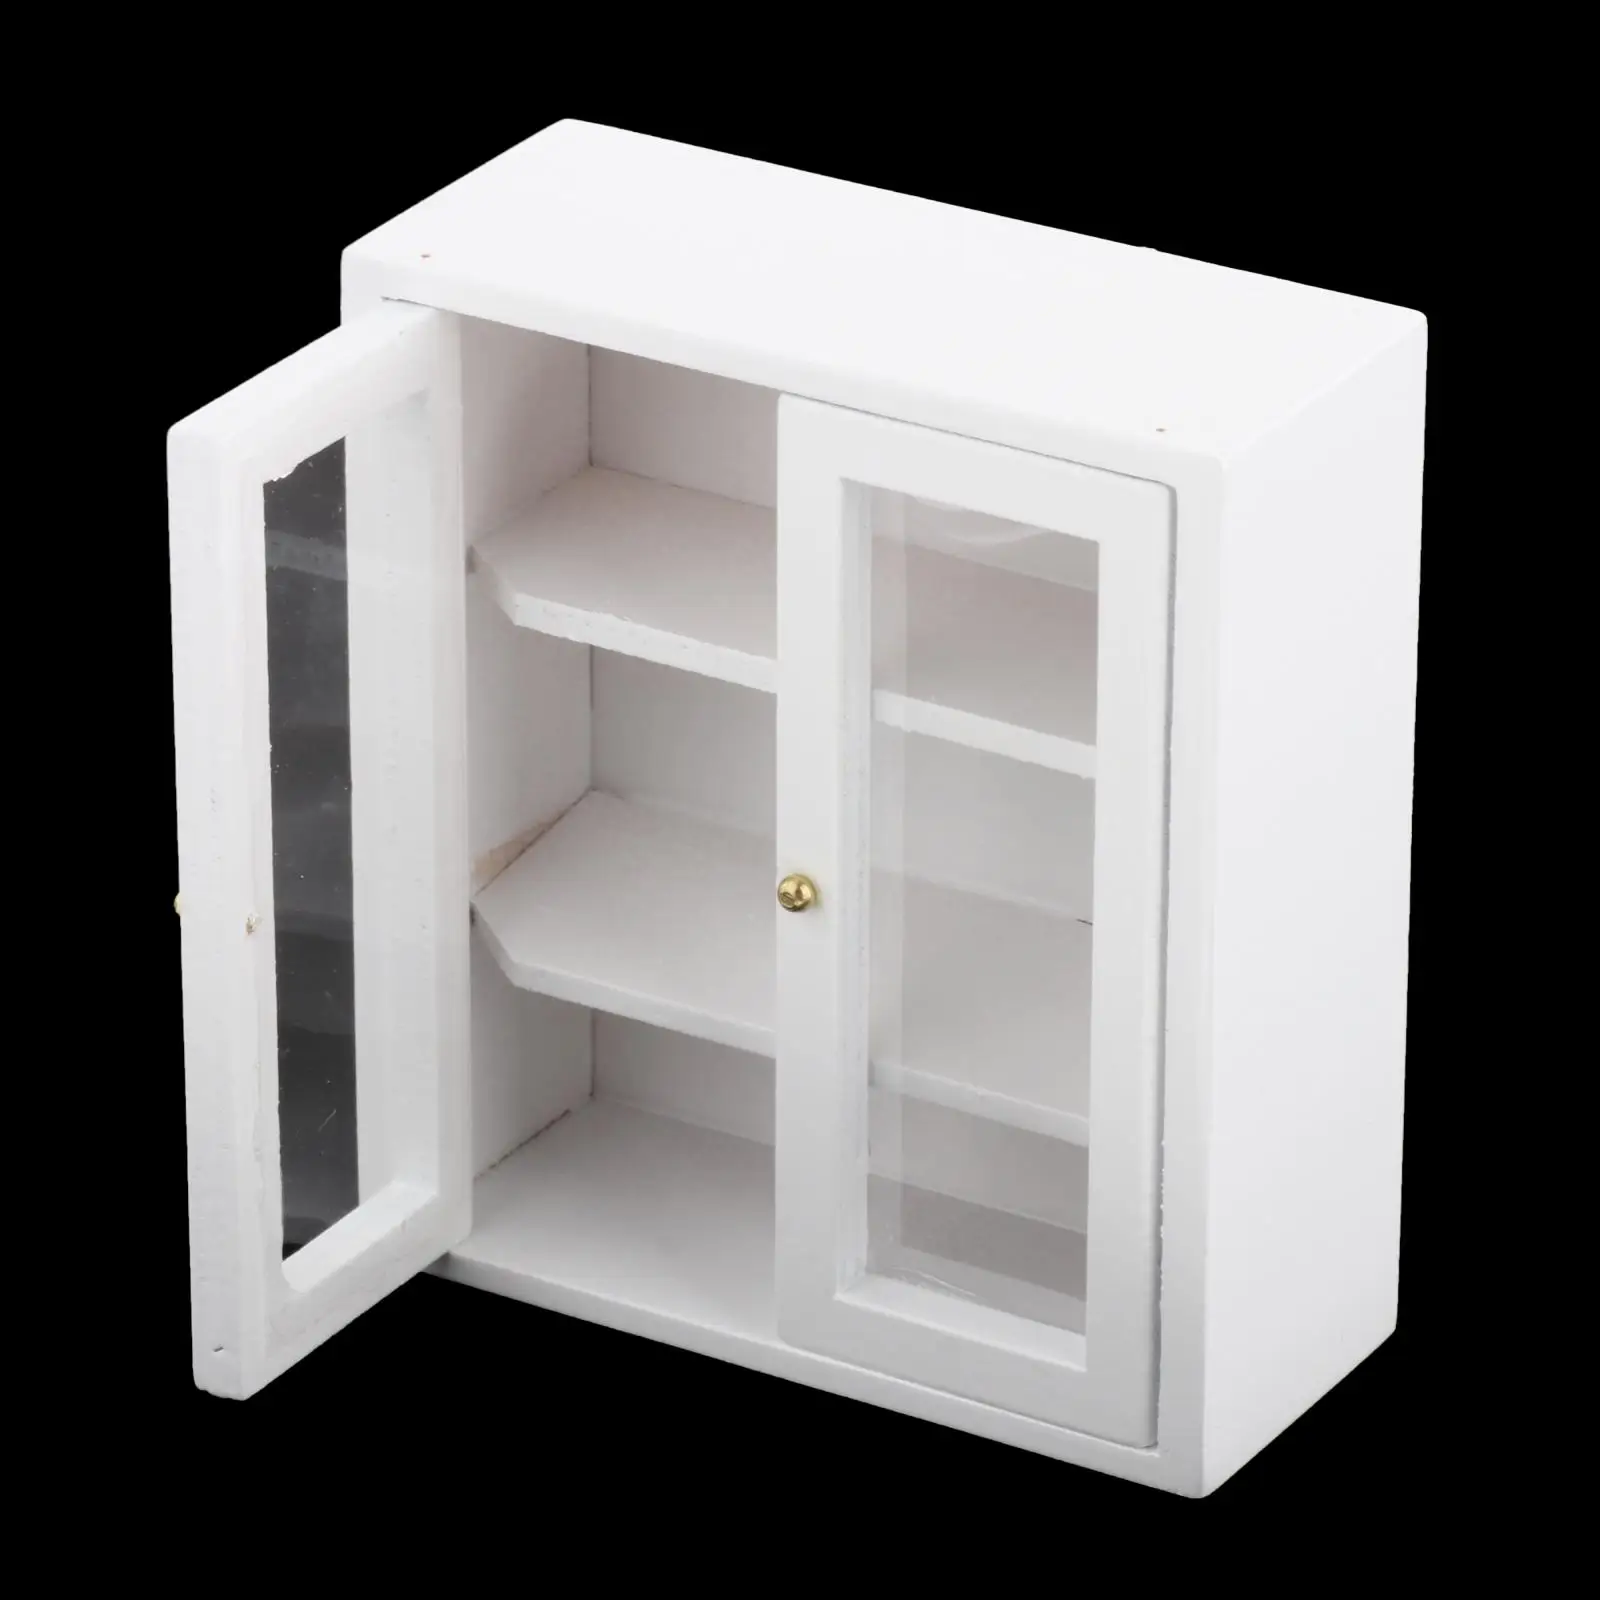 1/12 Dollhouse Handcraft Wood Cabinet Cupboard Organizer Creative Furniture Kitchen Bedroom Accessory Pretend Play